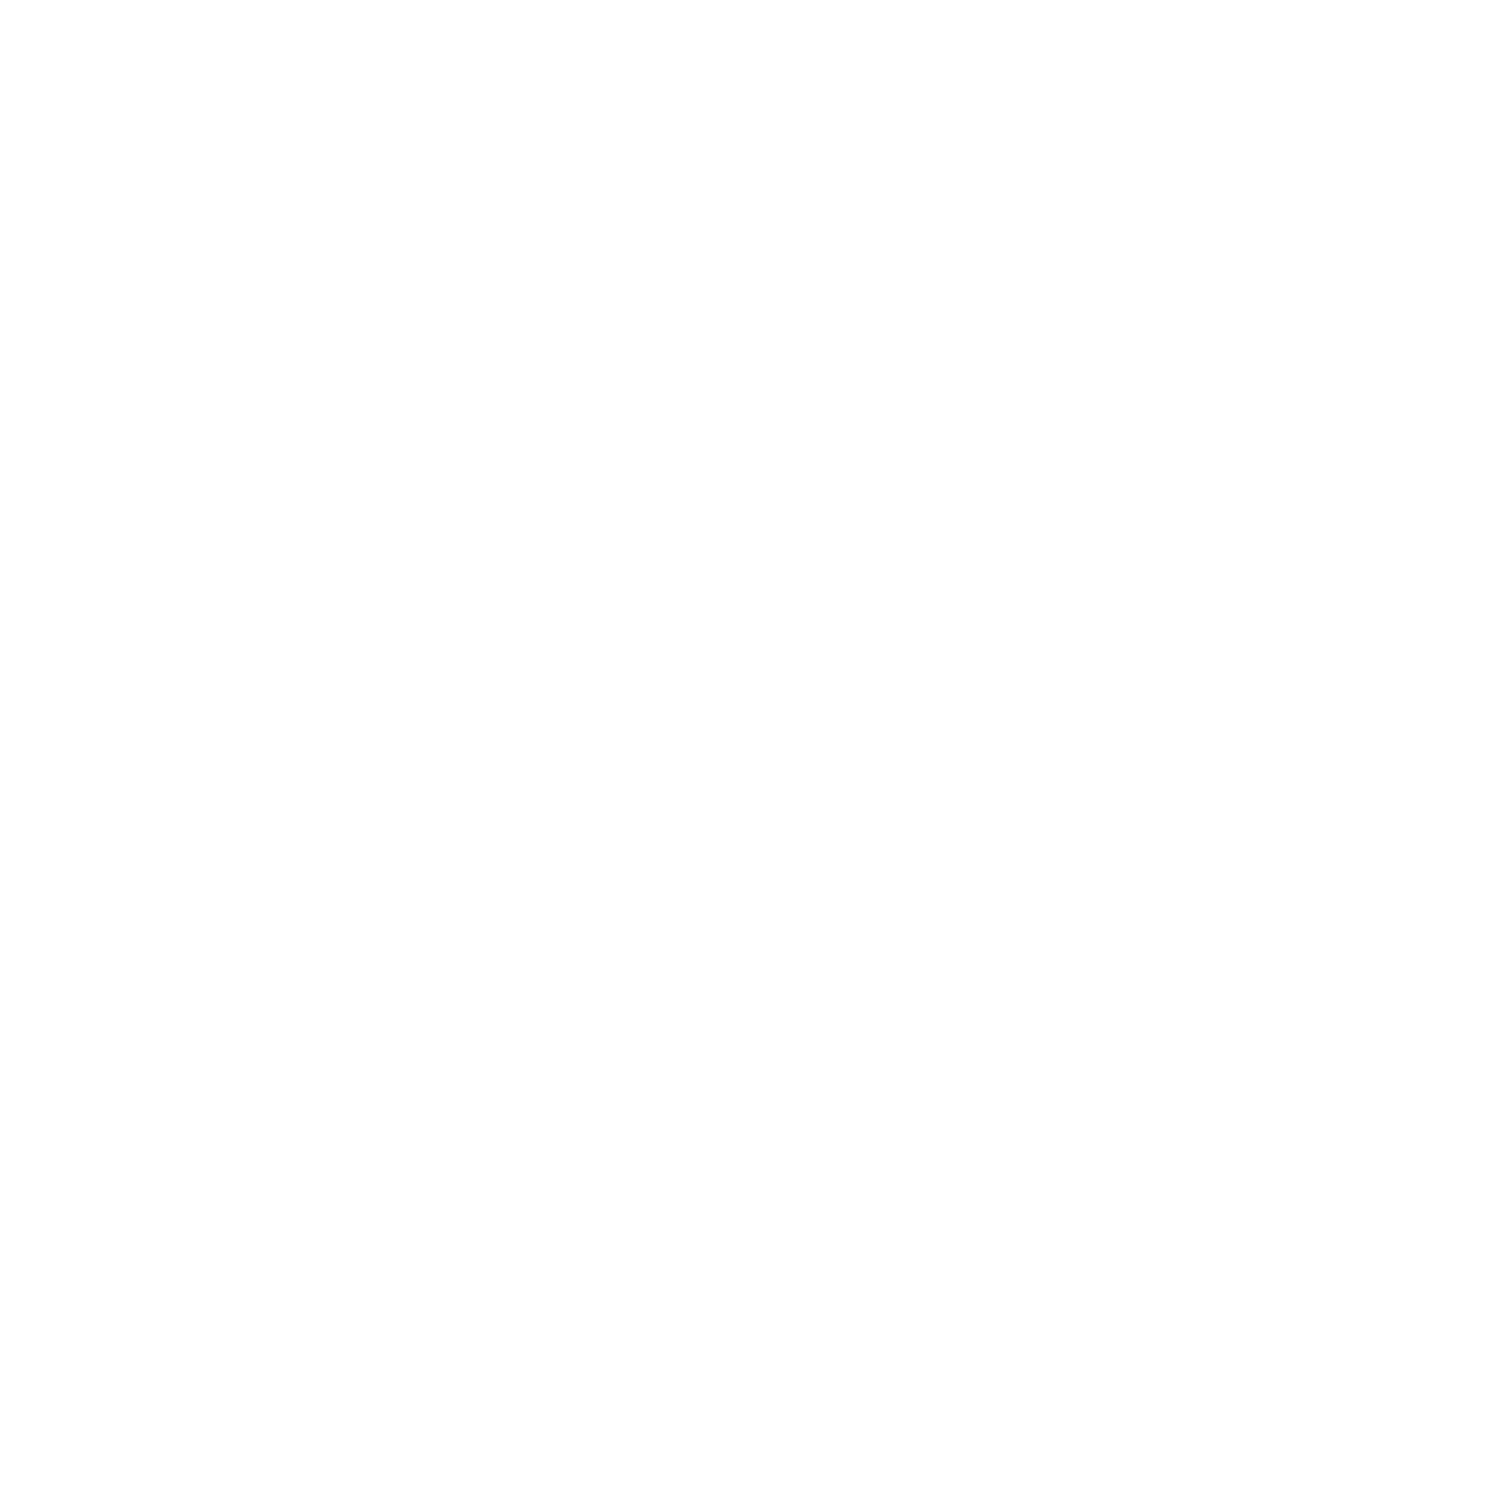 Footer for Meirowitz & Wasserberg